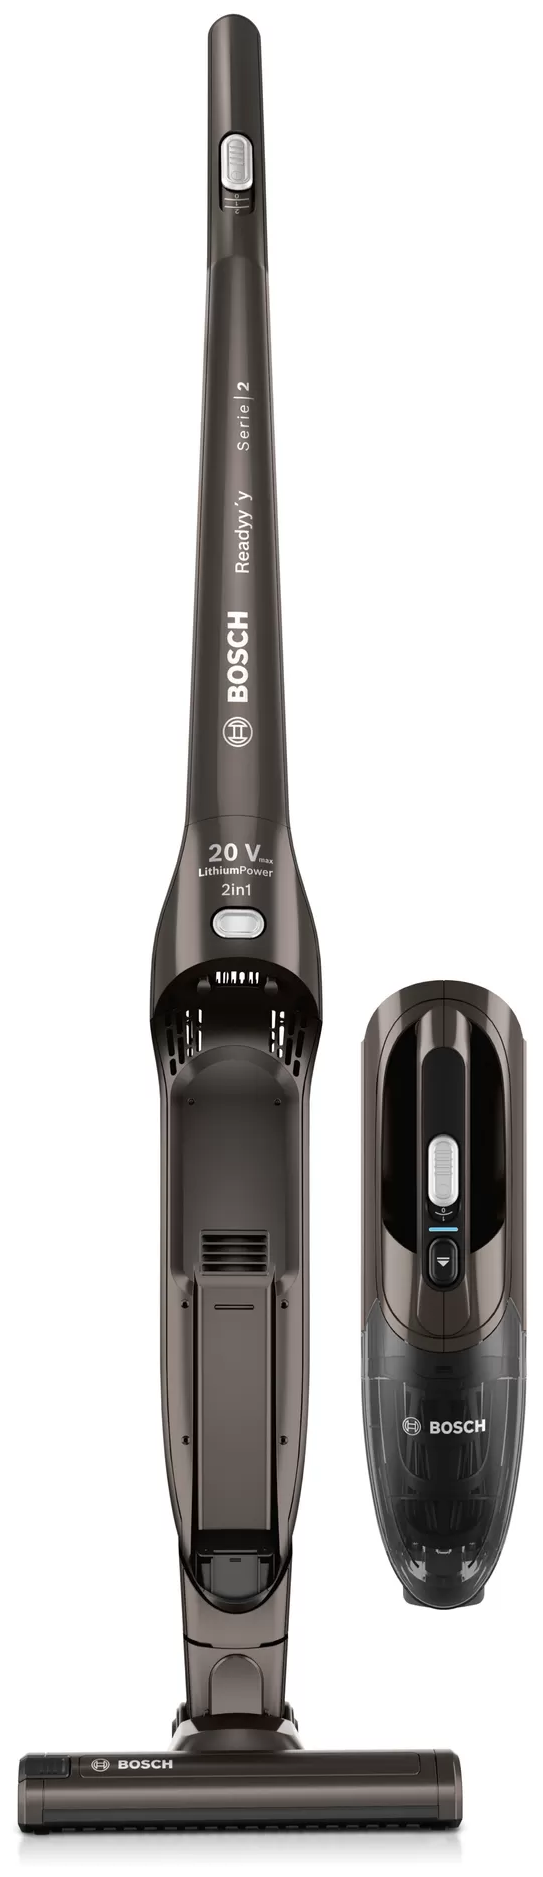 Пылесос Bosch BCHF220T, черный